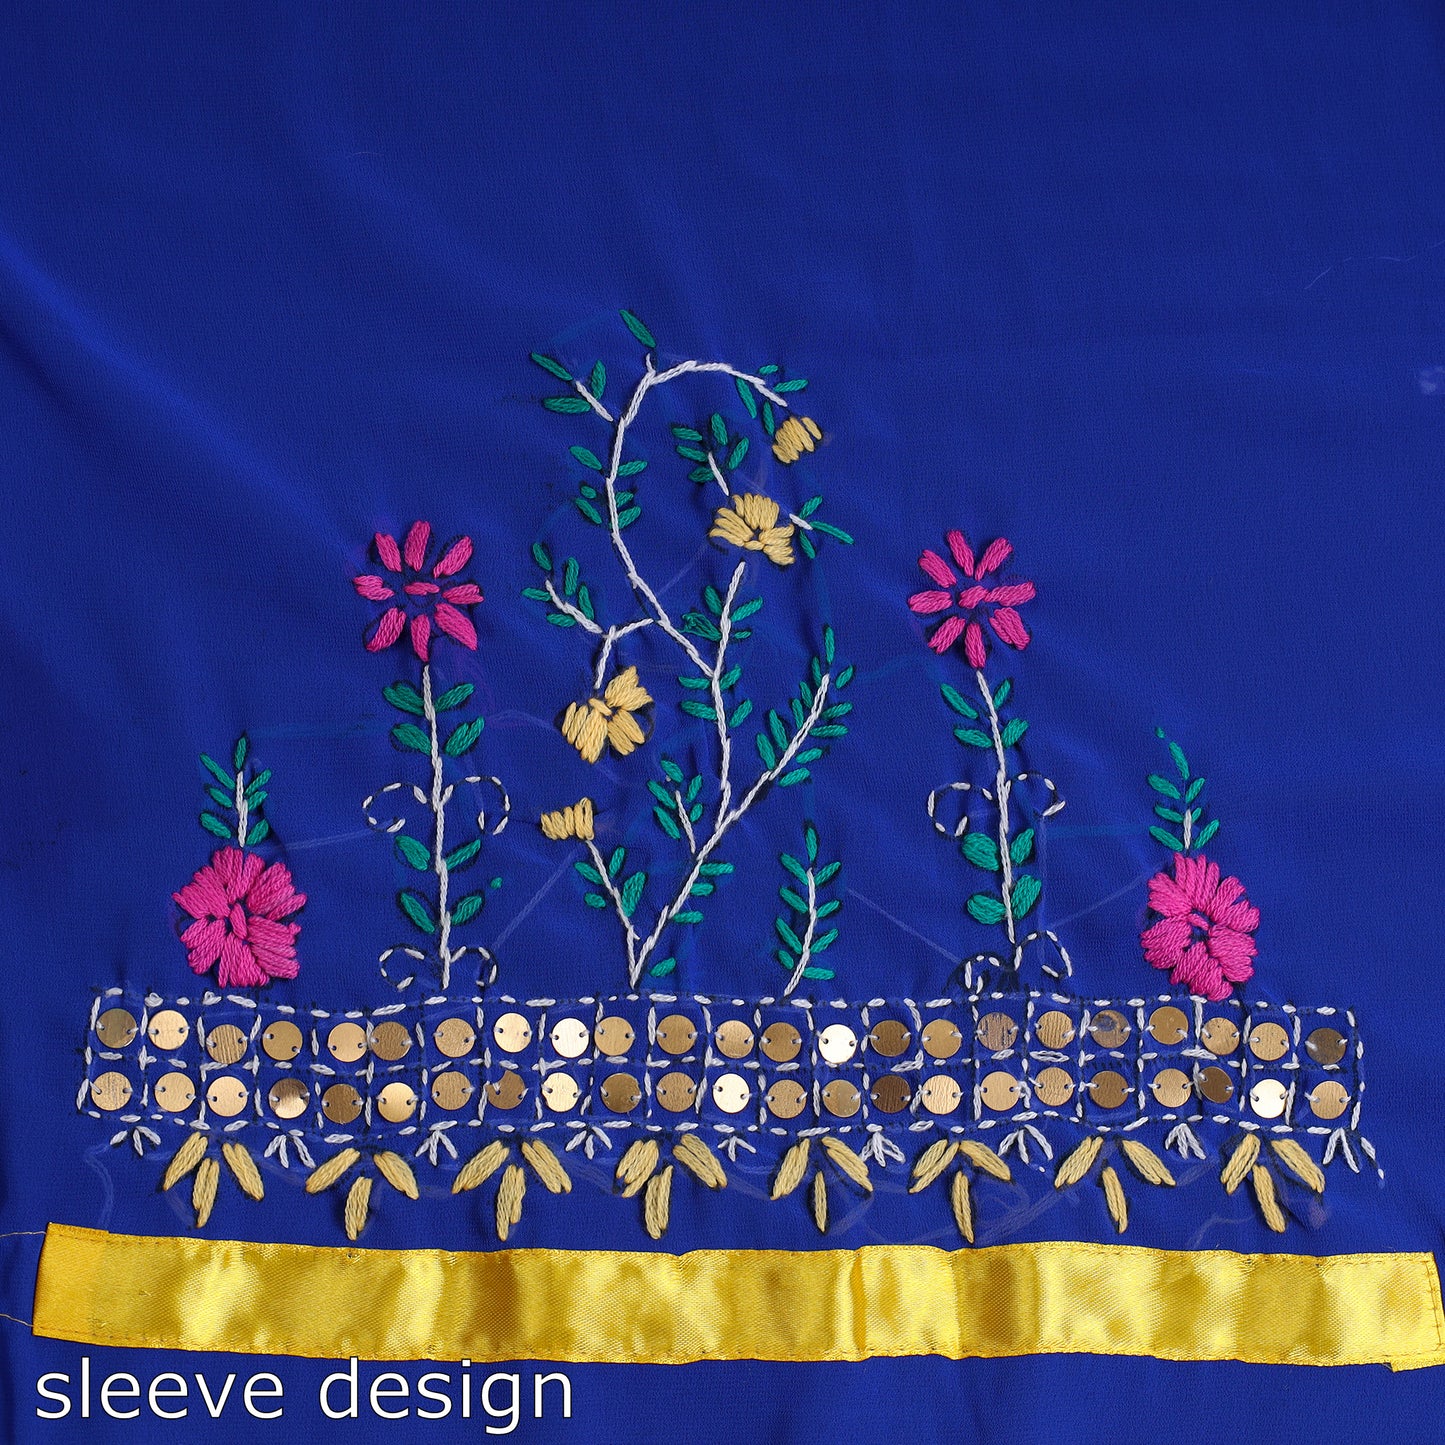 Blue - 3pc Phulkari Embroidery Chapa Work Georgette Suit Material Set 63